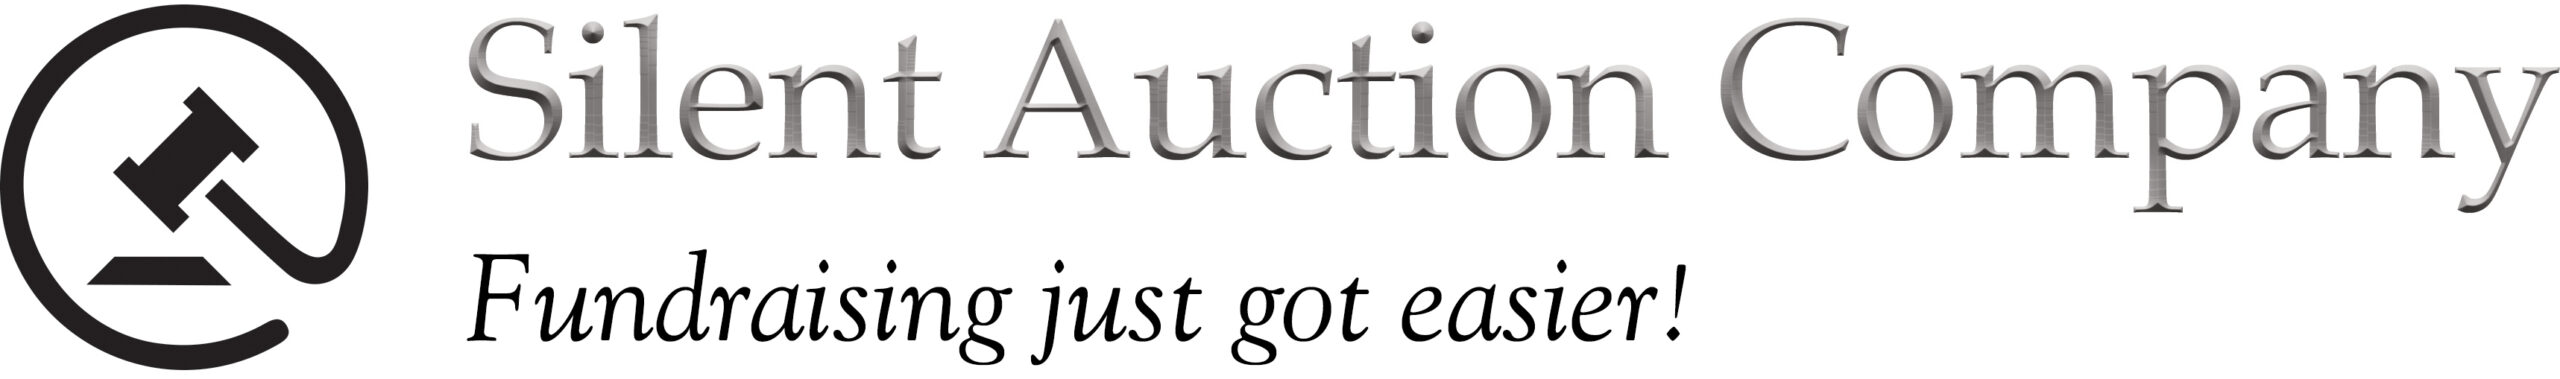 silent-auction-company-logo